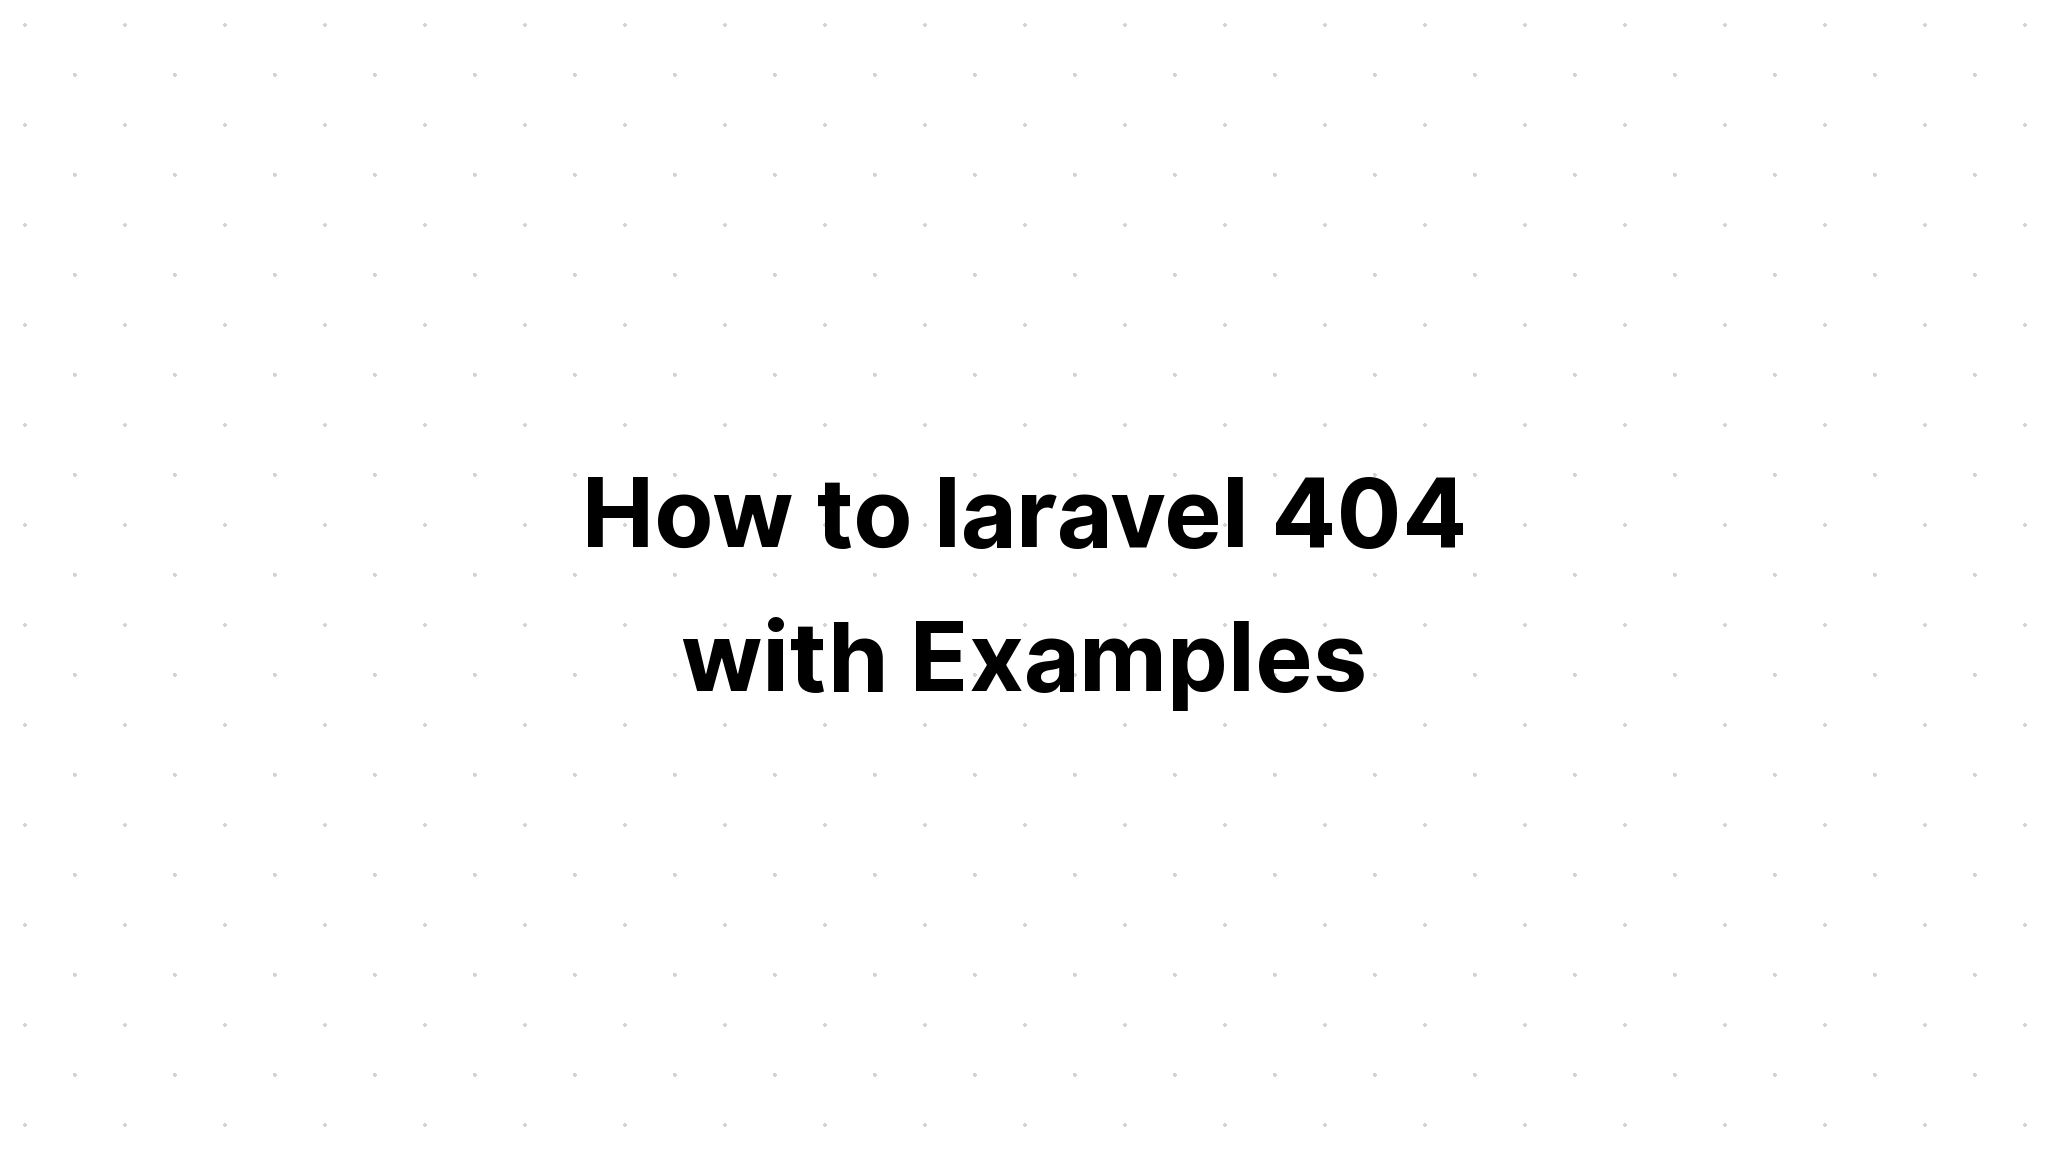 Cara laravel 404 dengan Contoh